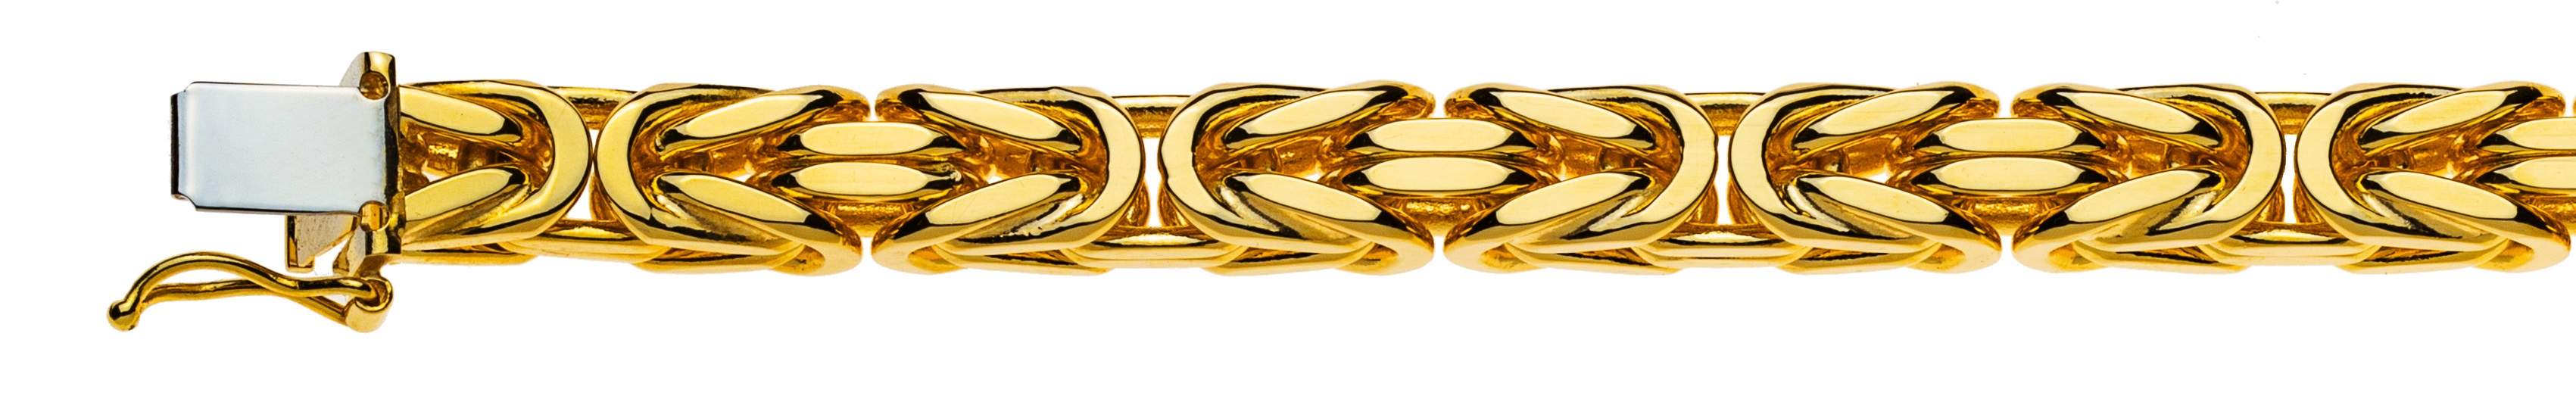 AURONOS Prestige Necklace yellow gold 18K king chain 60cm 6mm